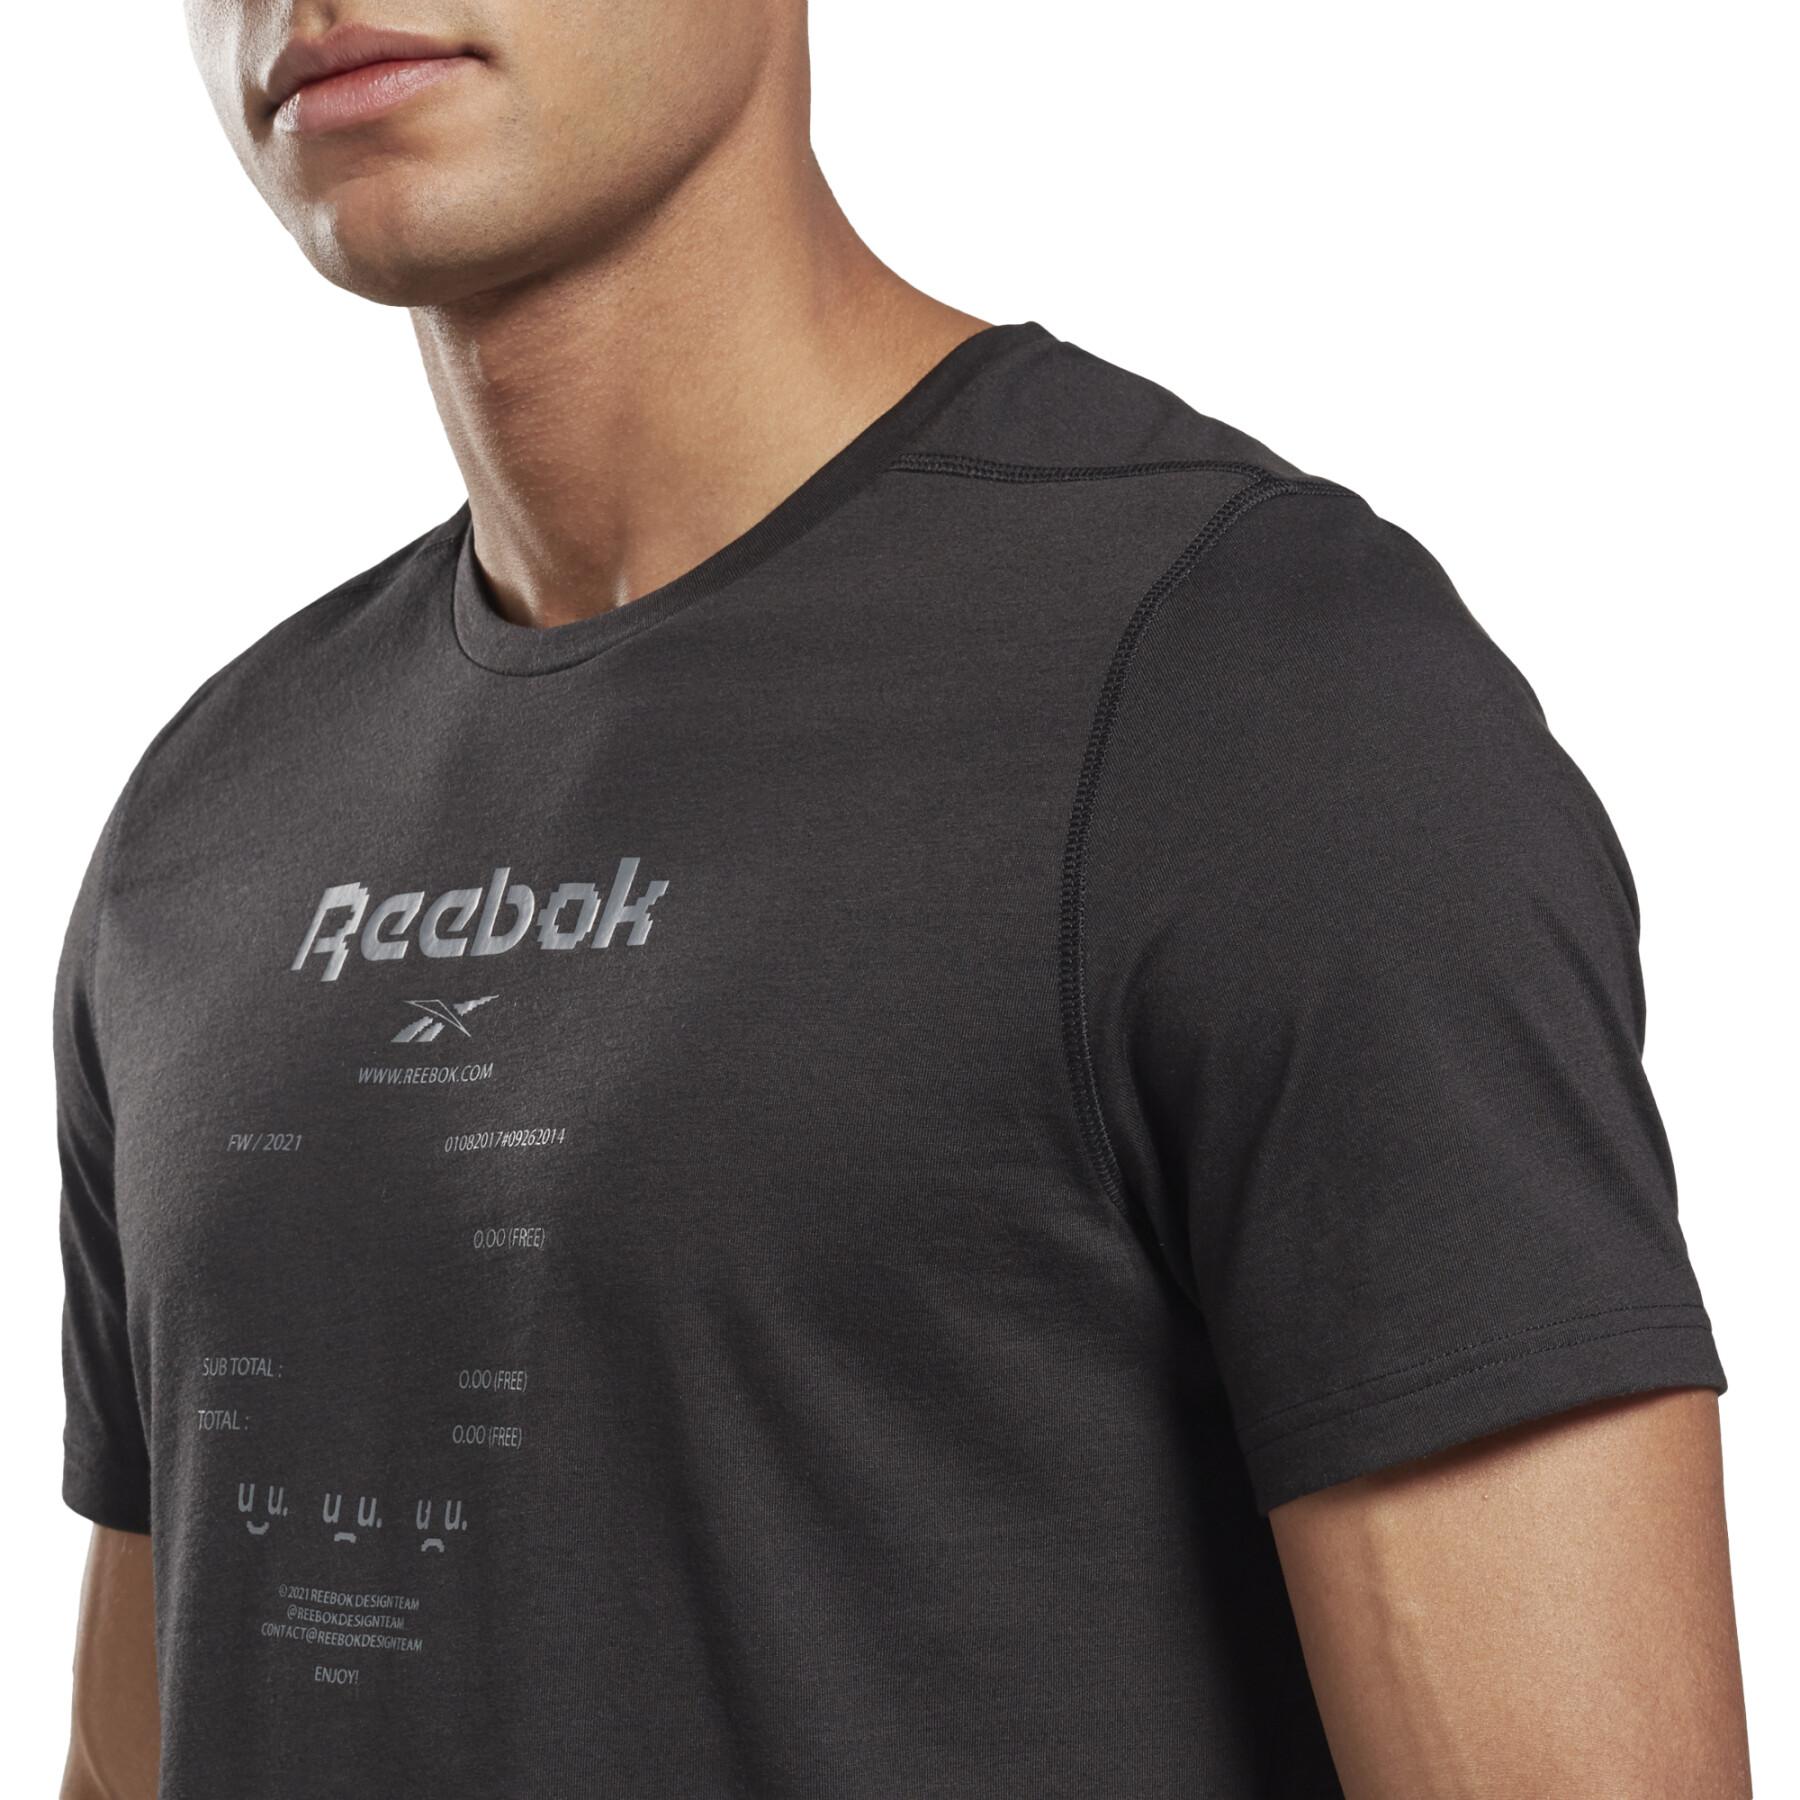 T-shirt Reebok Speedwick Graphic Move